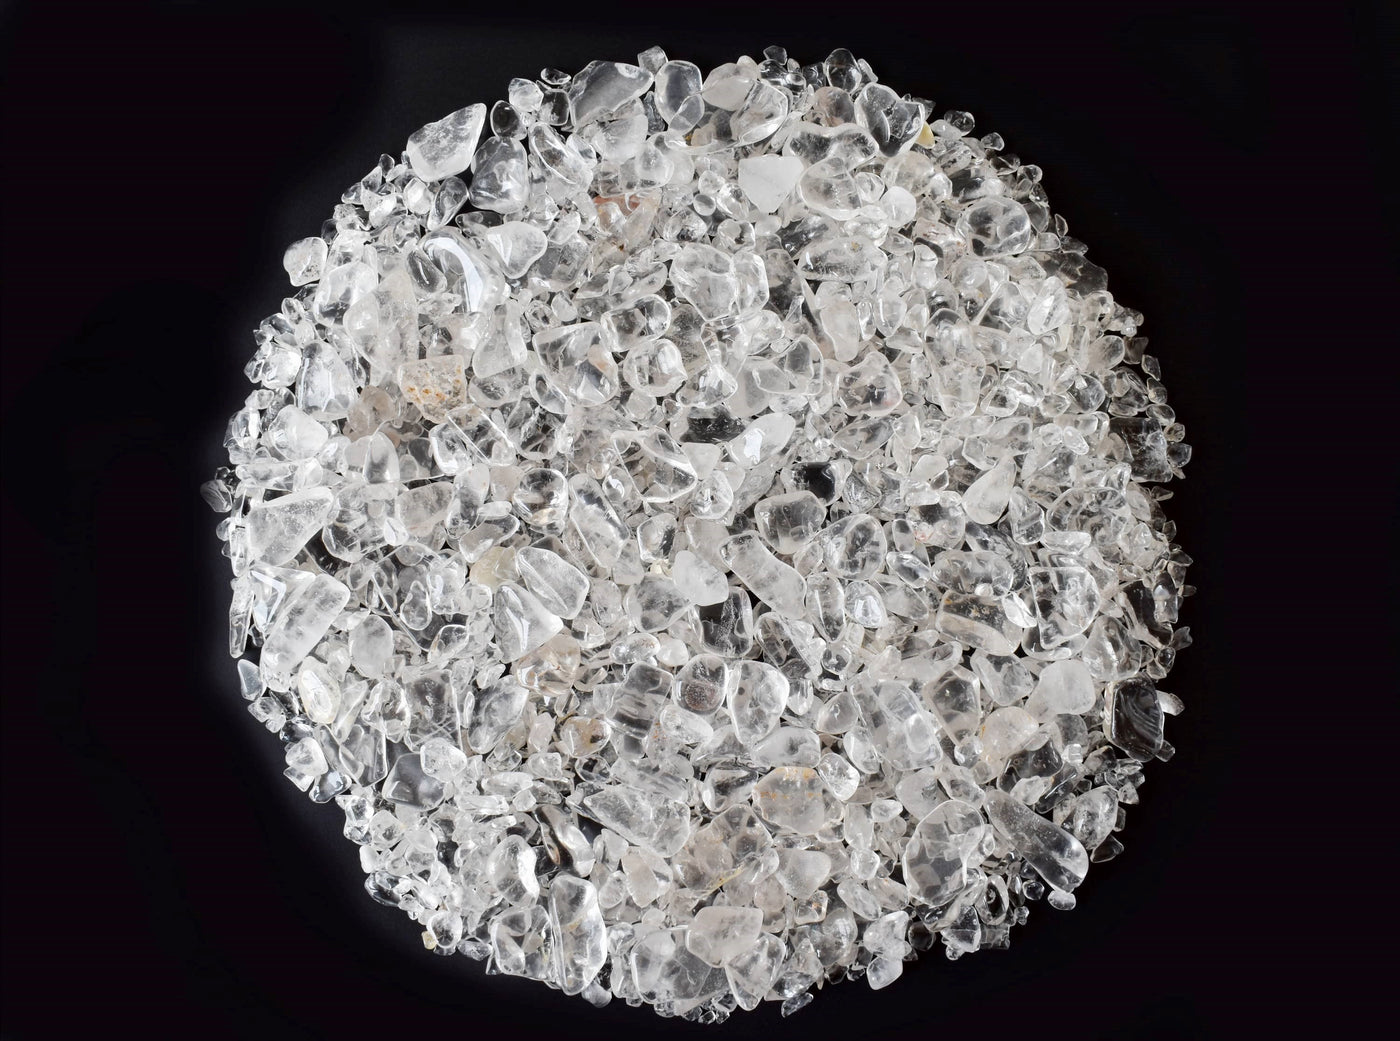 Quartz de cristal brut, éclats de cristal, éclats de pierres précieuses non percés dans un paquet de 4 oz, 1/2 lb, 1 lb